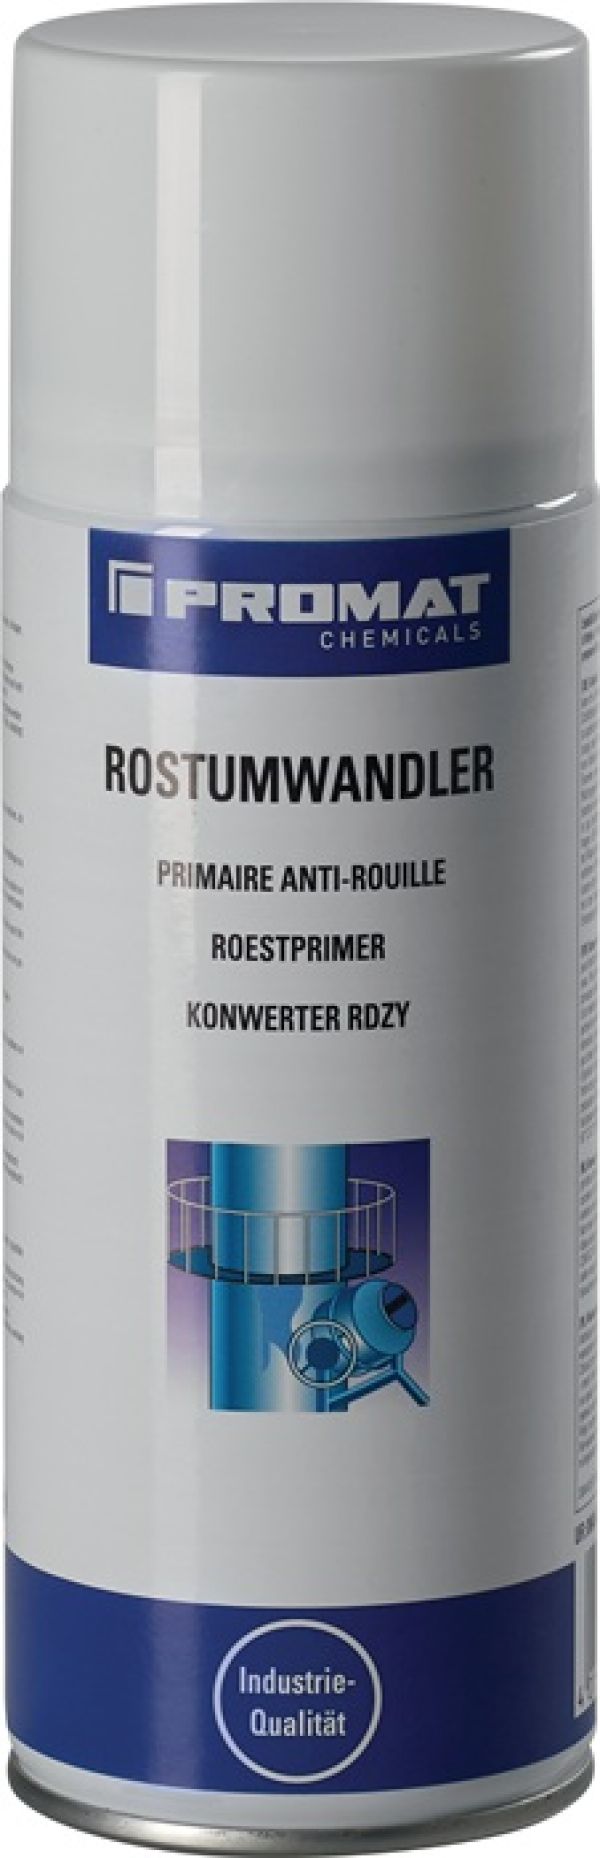 Rostumwandler 400 ml Spraydose PROMAT CHEMICALS